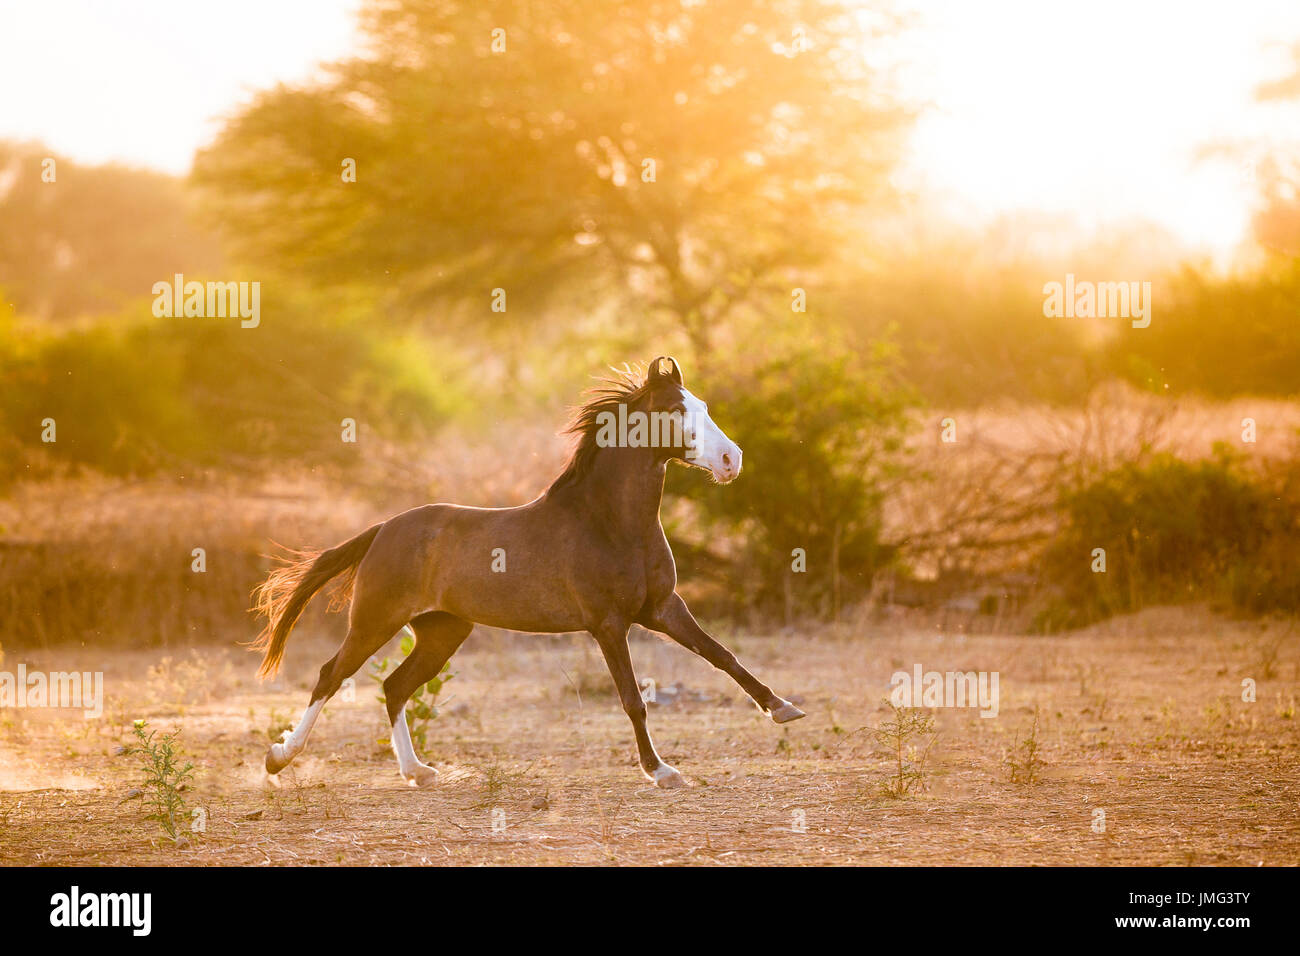 Marwari Horse. Juvenile mare galloping on dry grass, evening light. India Stock Photo